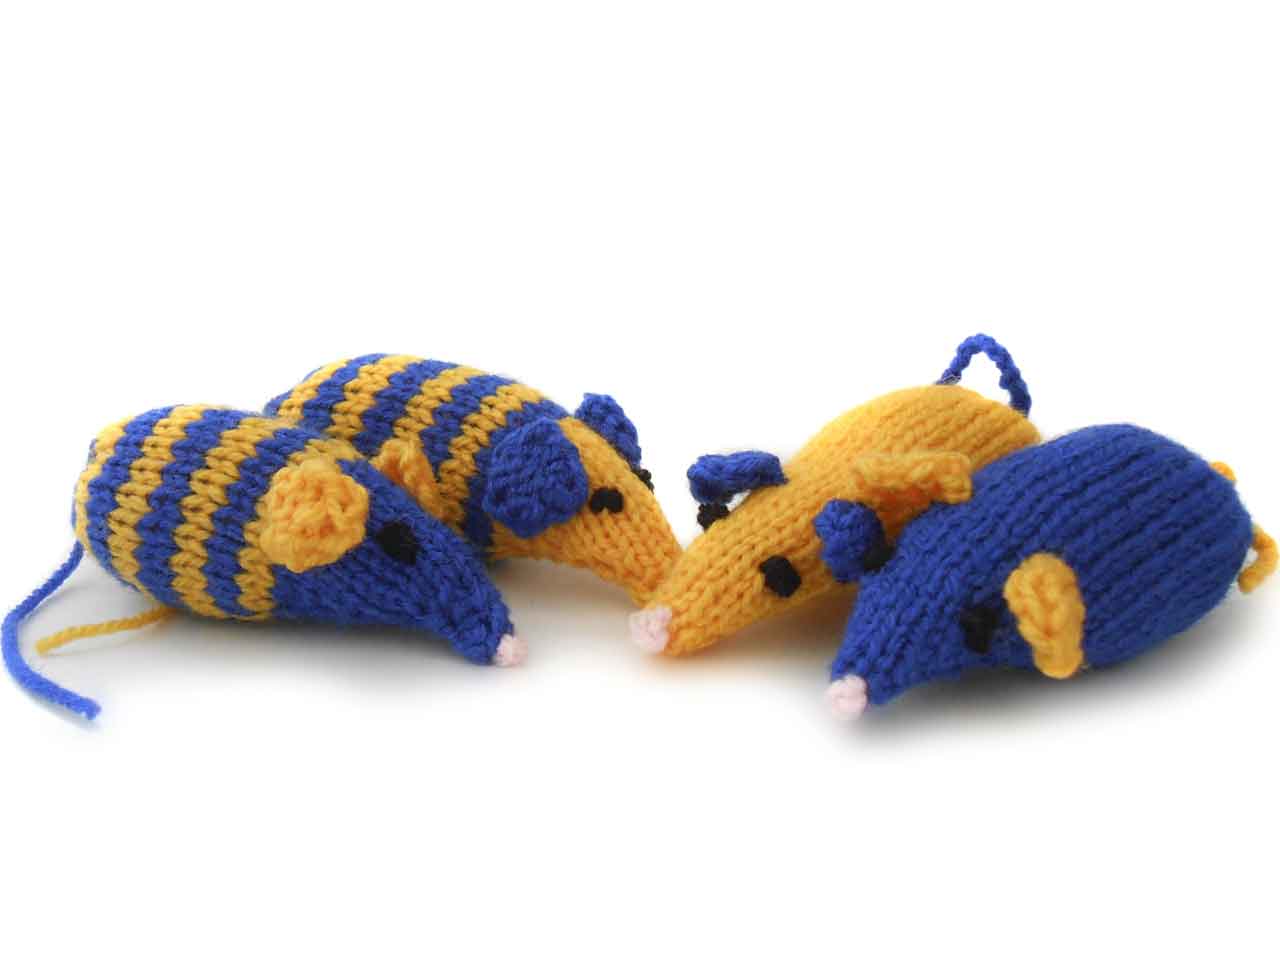 Knitted catnip mice